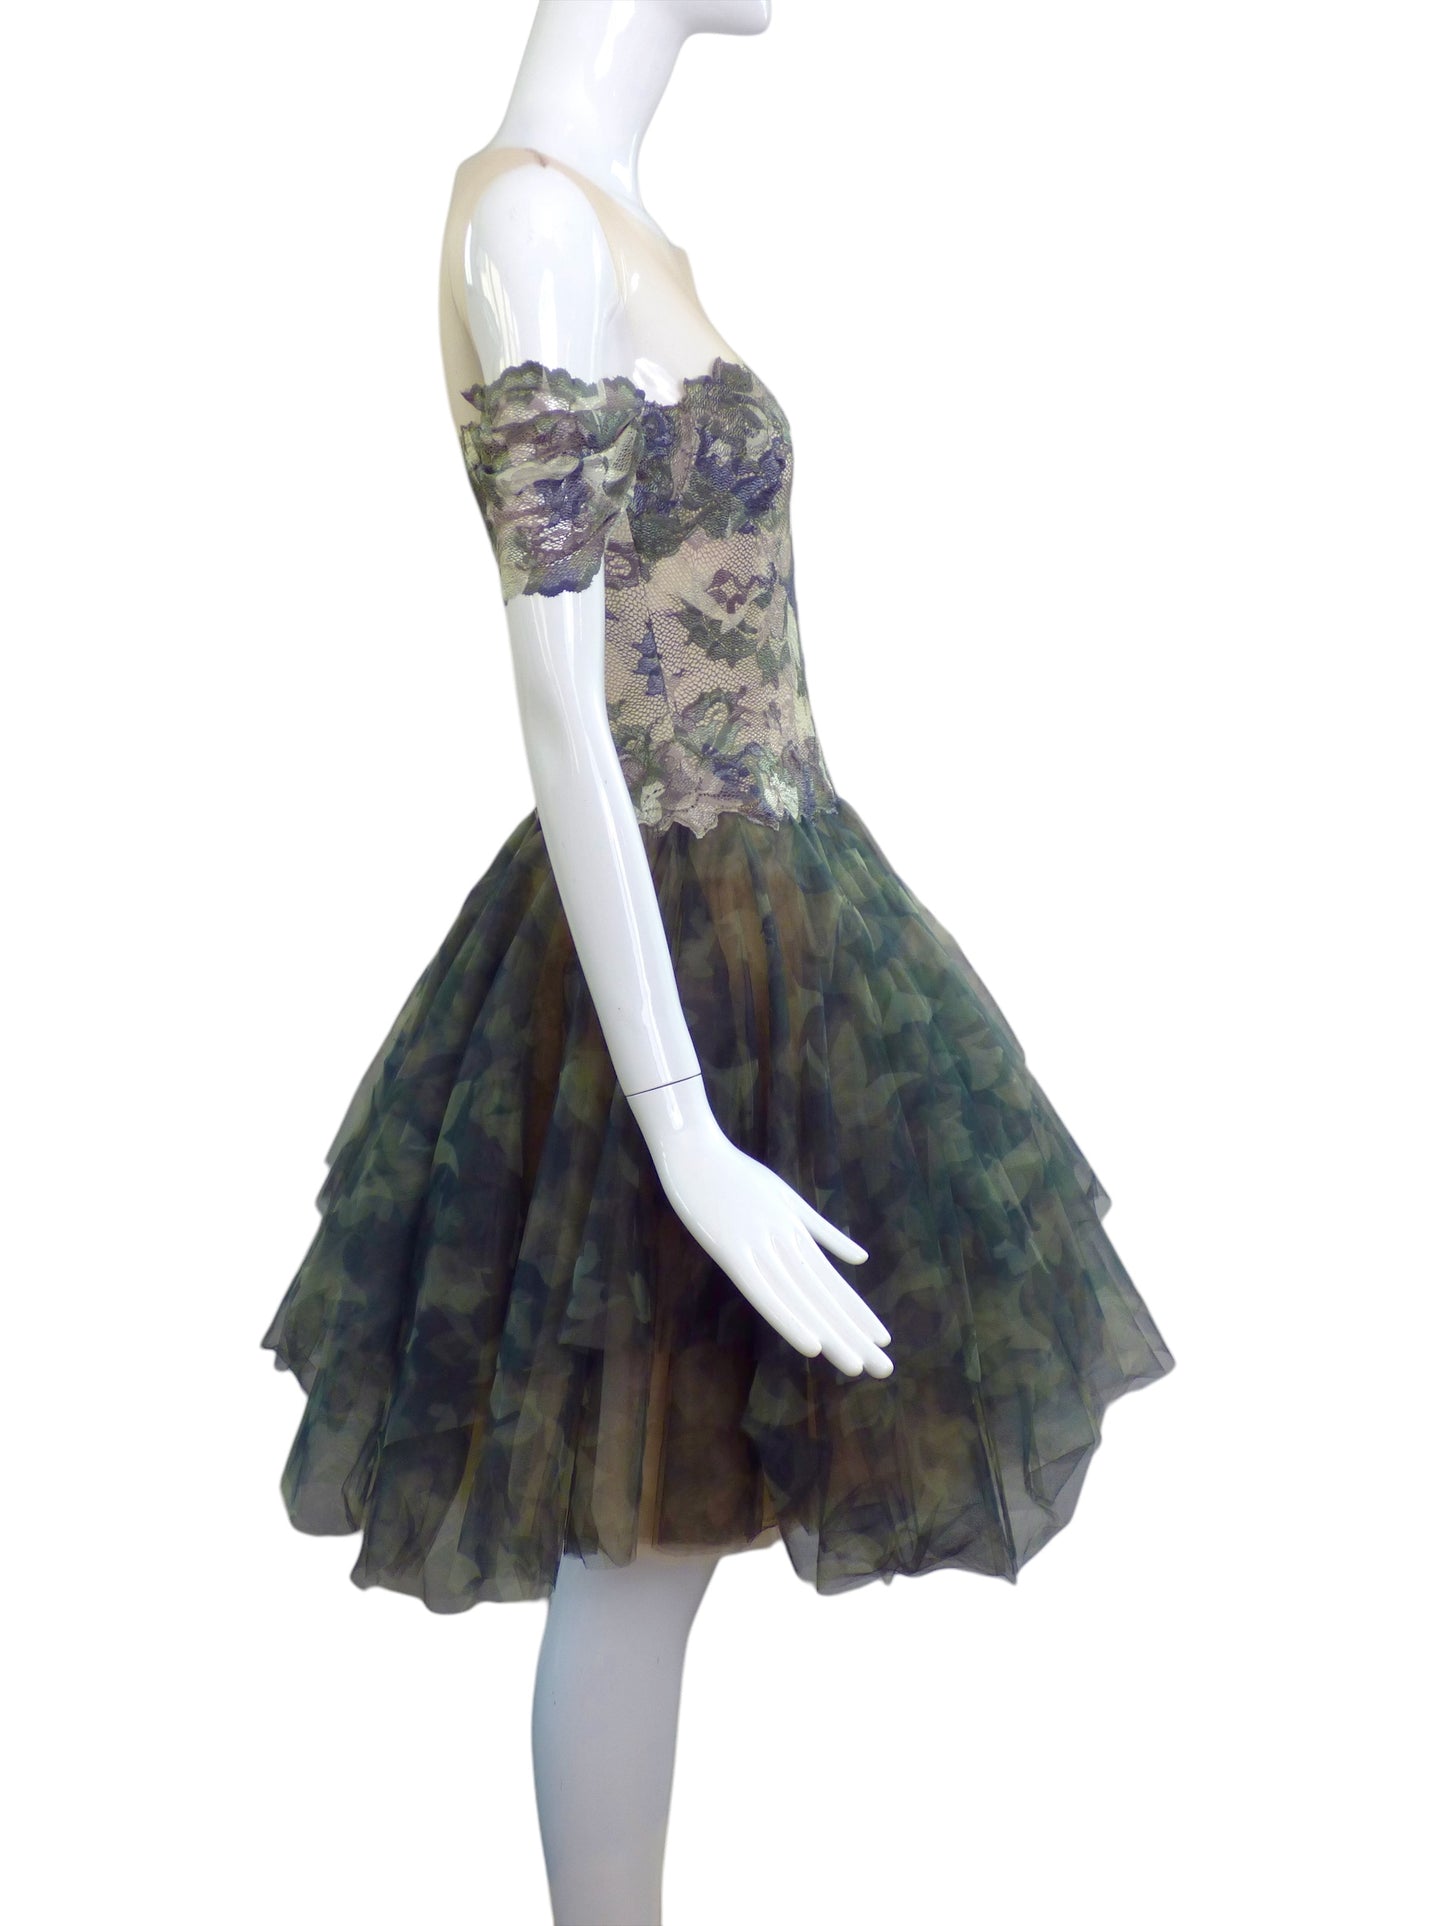 OLVI'S-Camo Tulle & Lace Cocktail Dress, Size-2